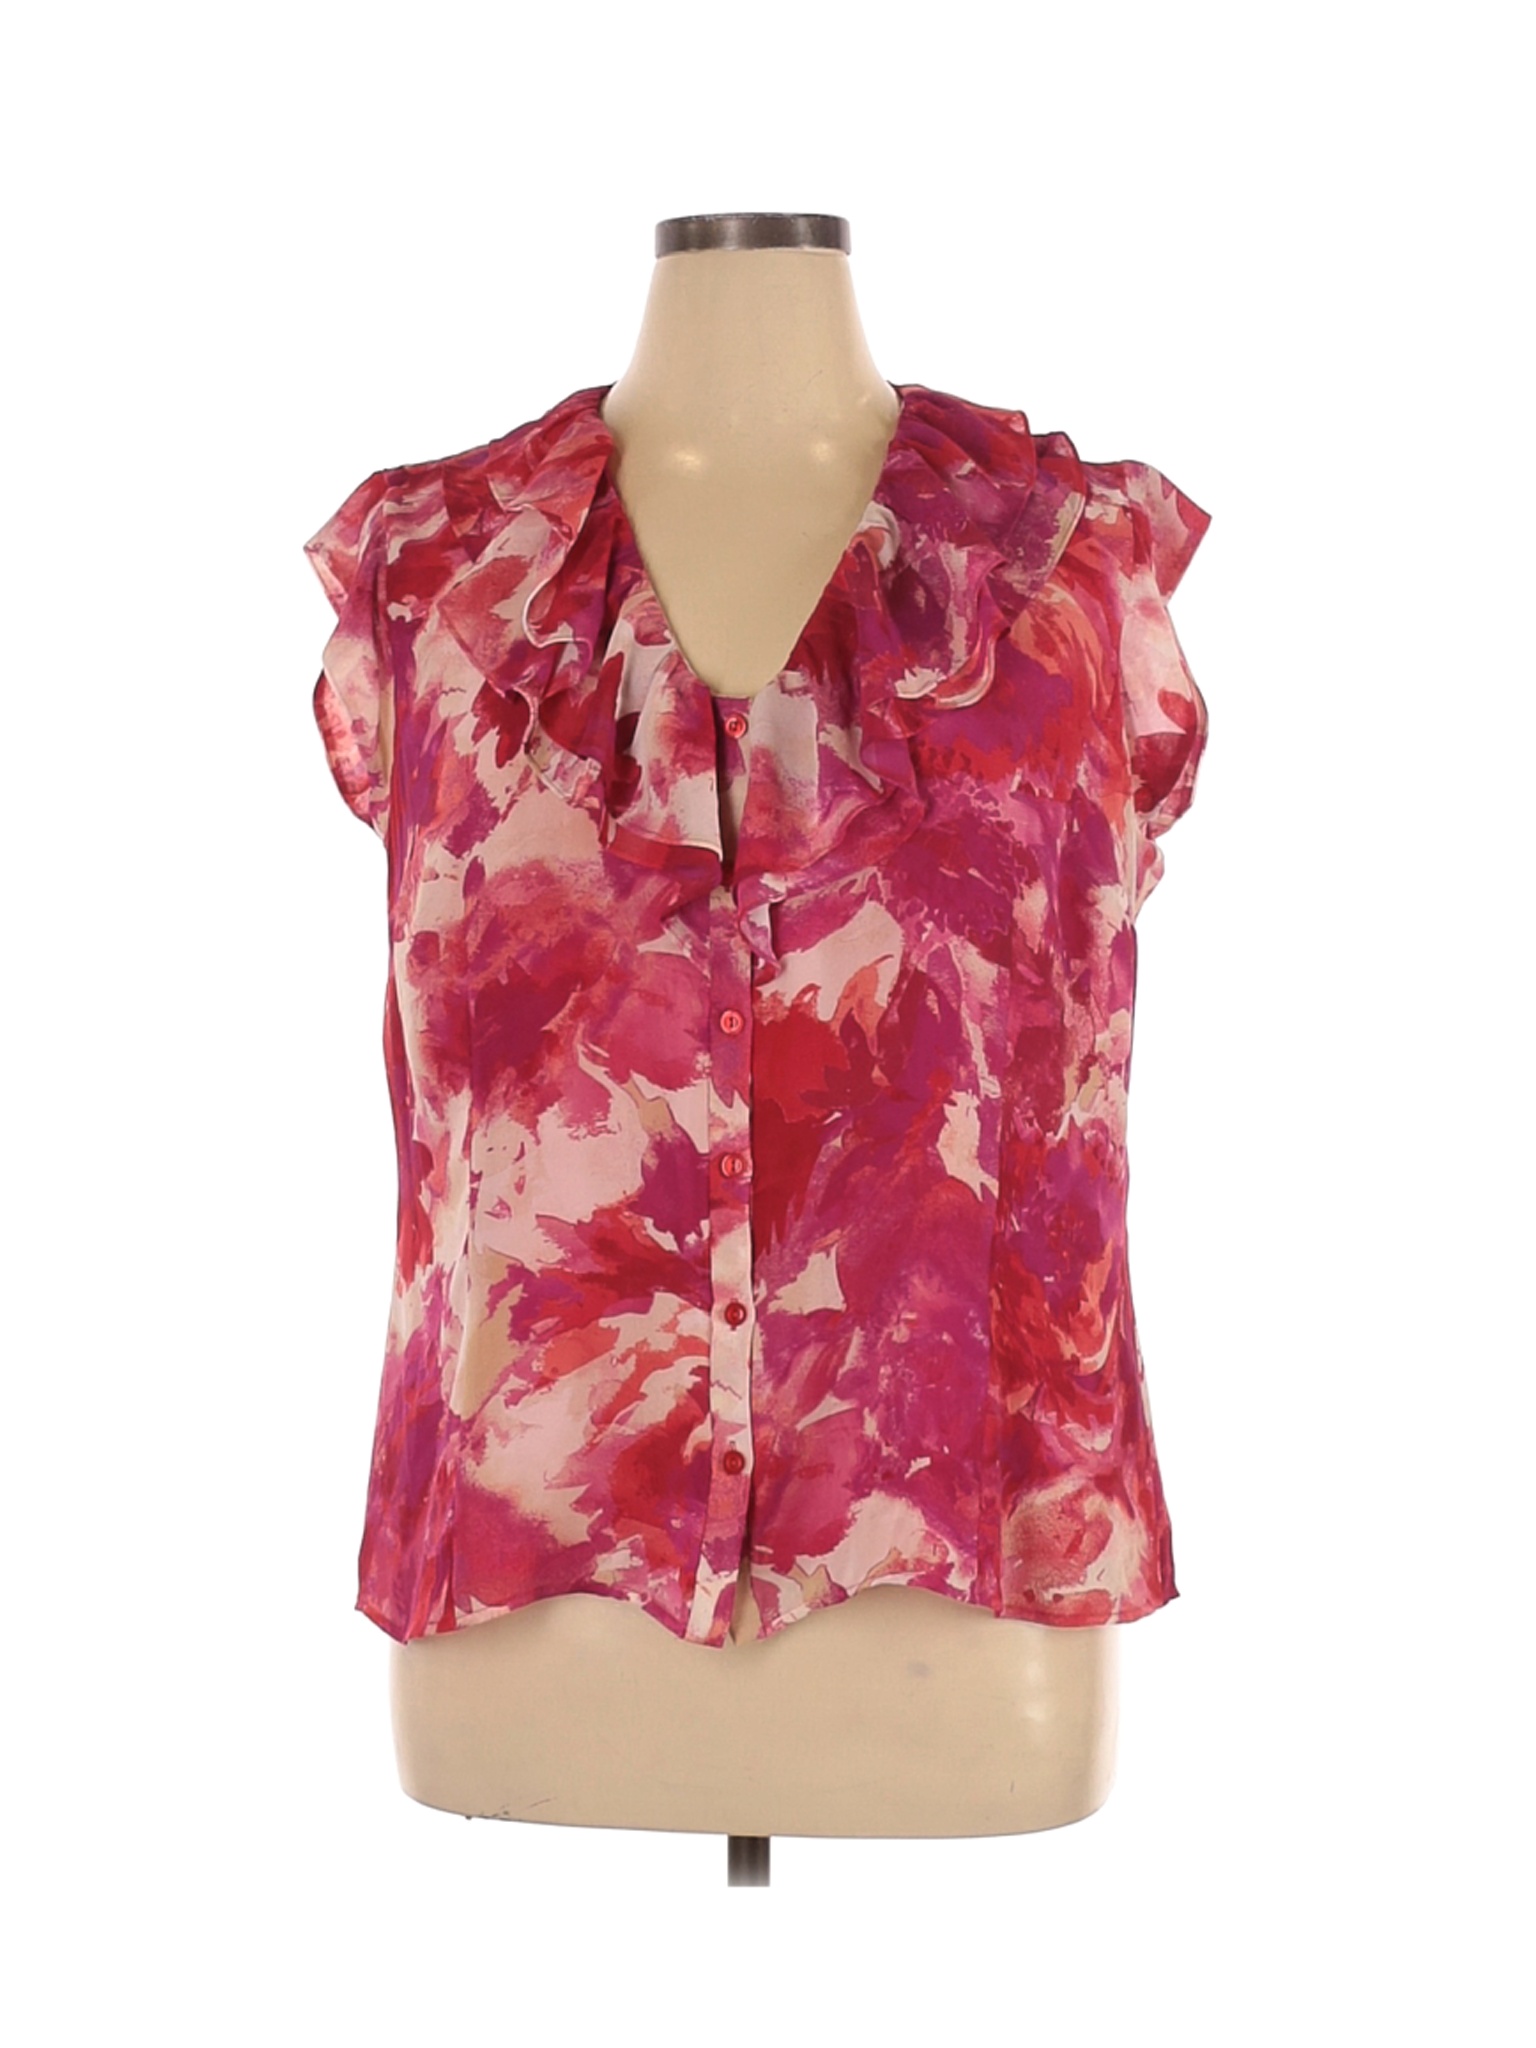 Jones New York Women Pink Short Sleeve Blouse 16 | eBay